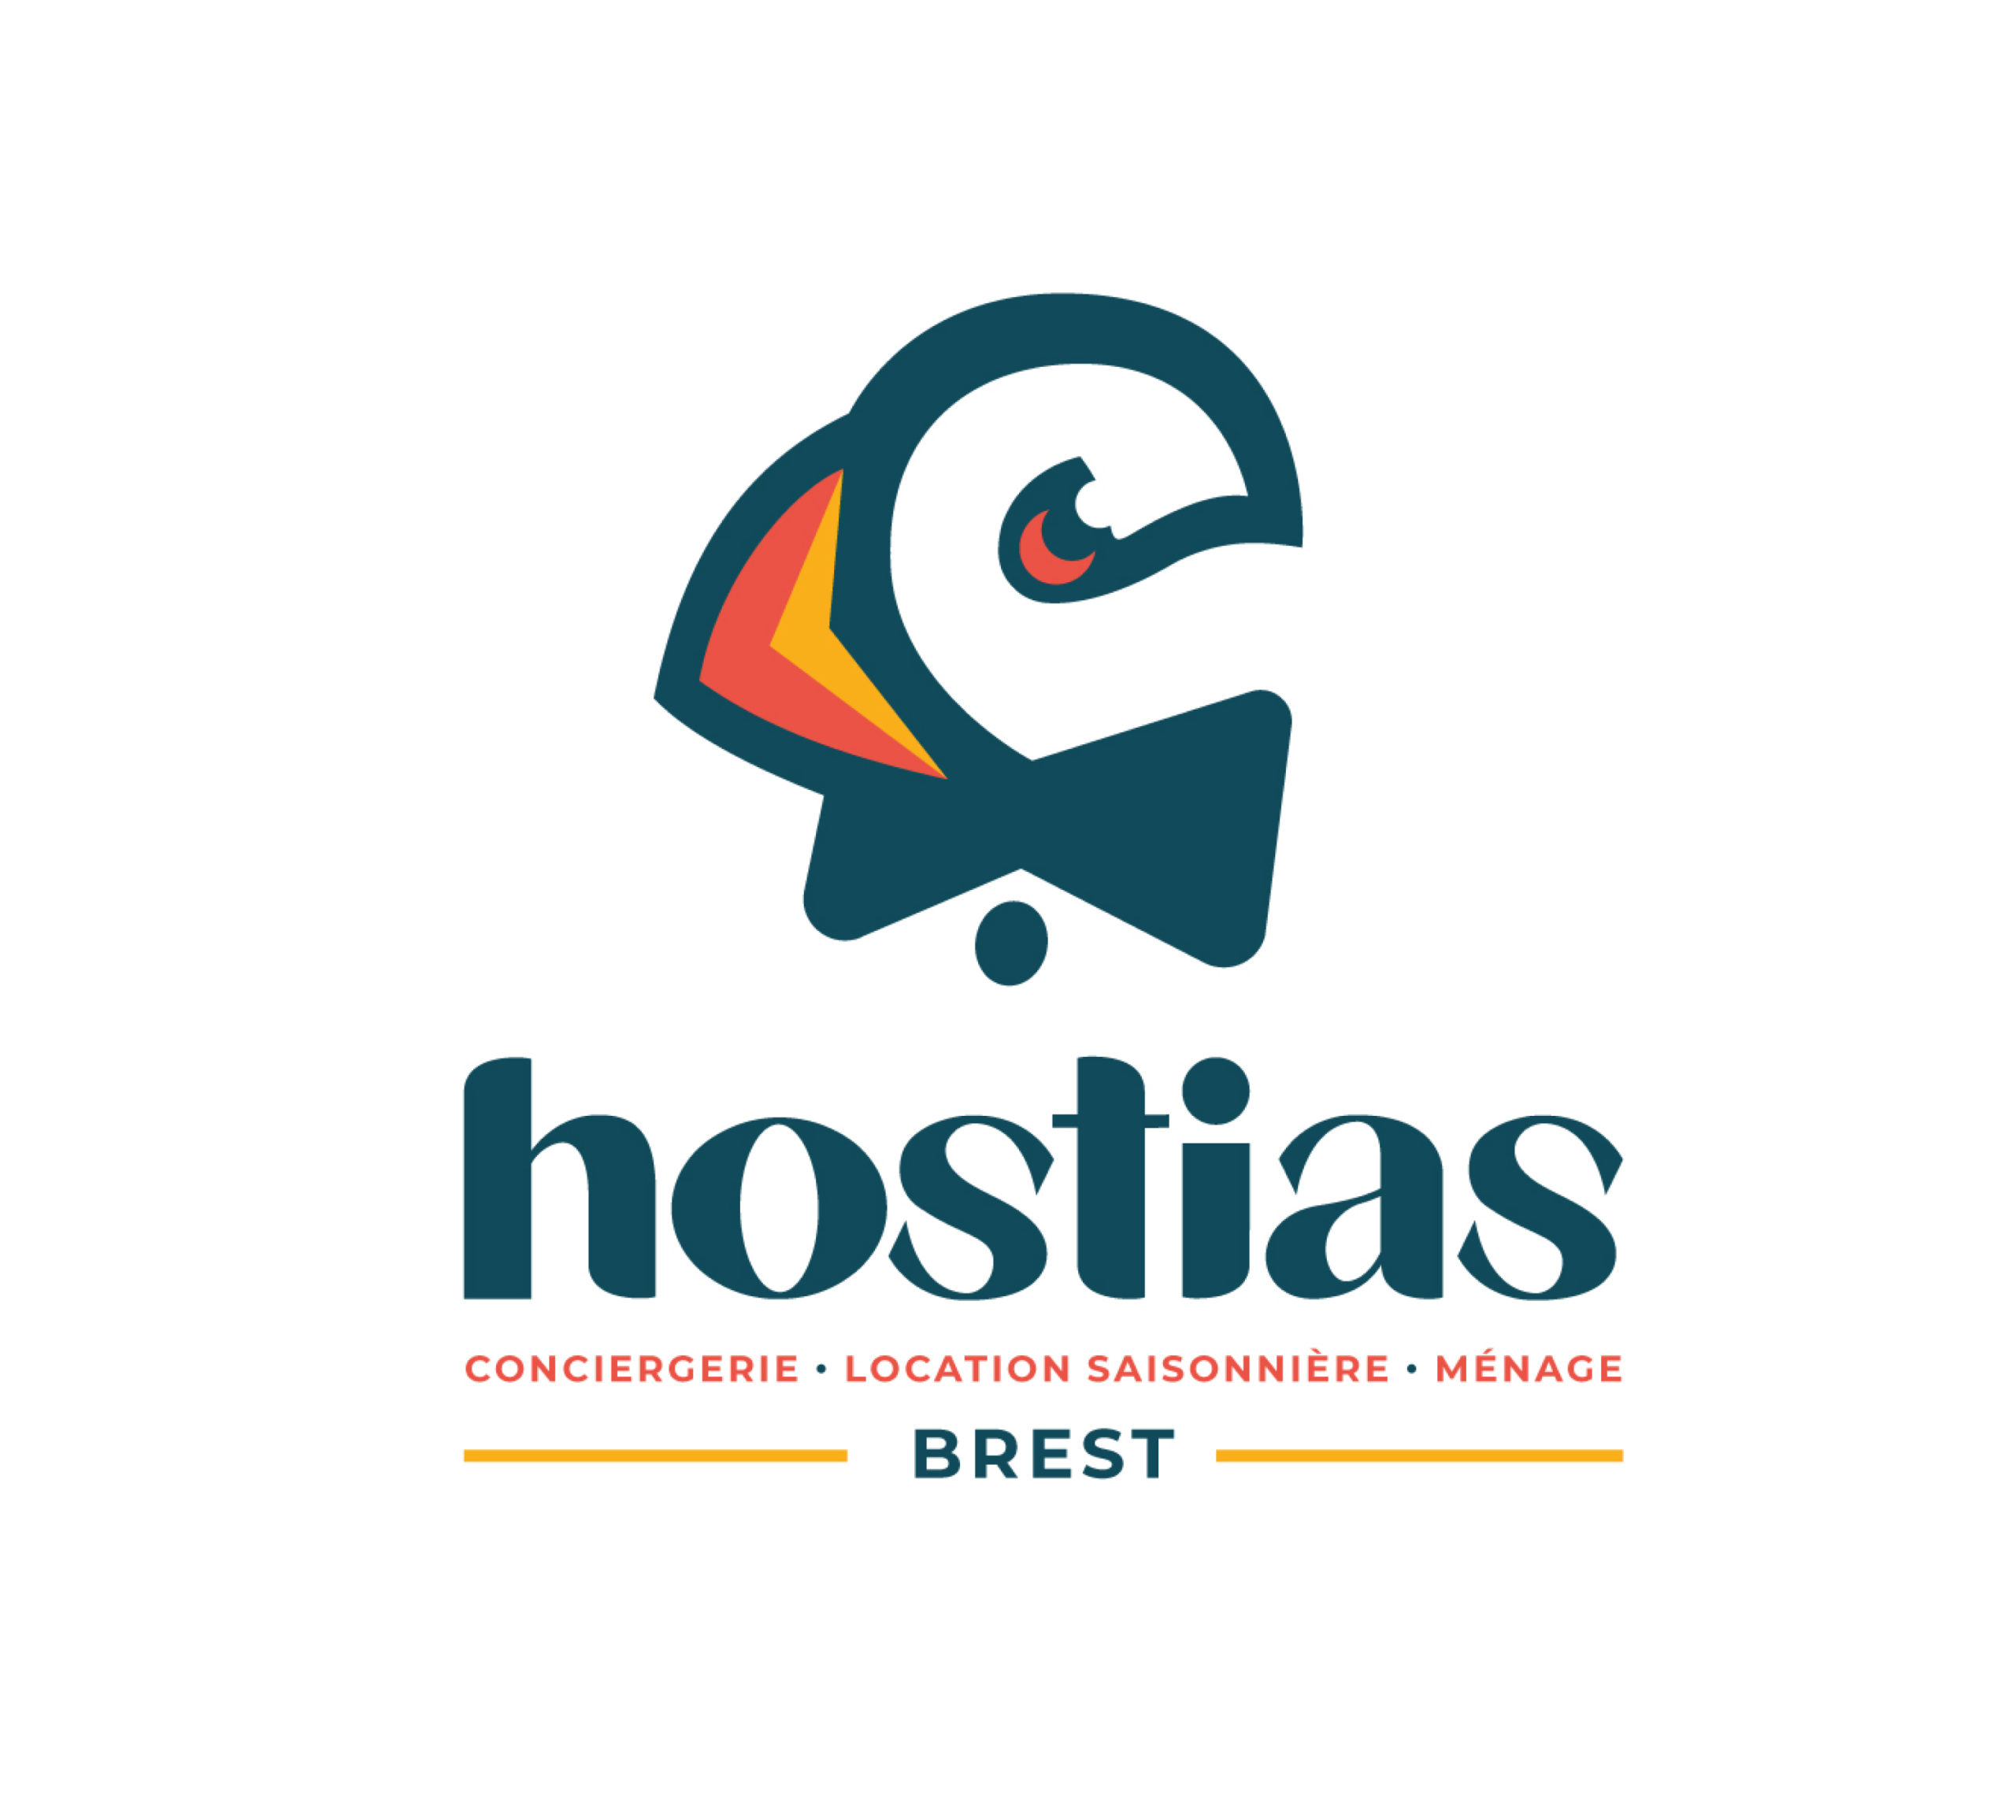 Création logo hostias conciergerie brest nice